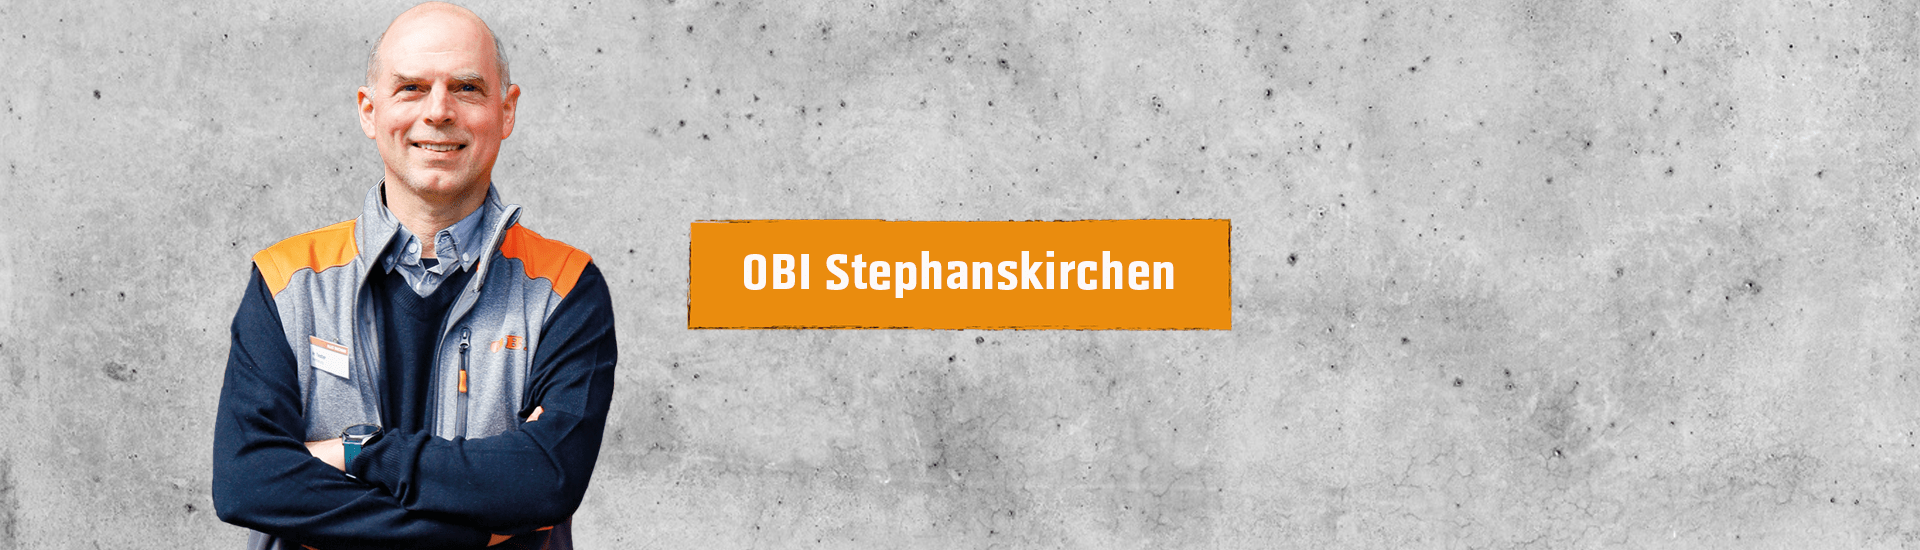 OBI Stephanskirchen